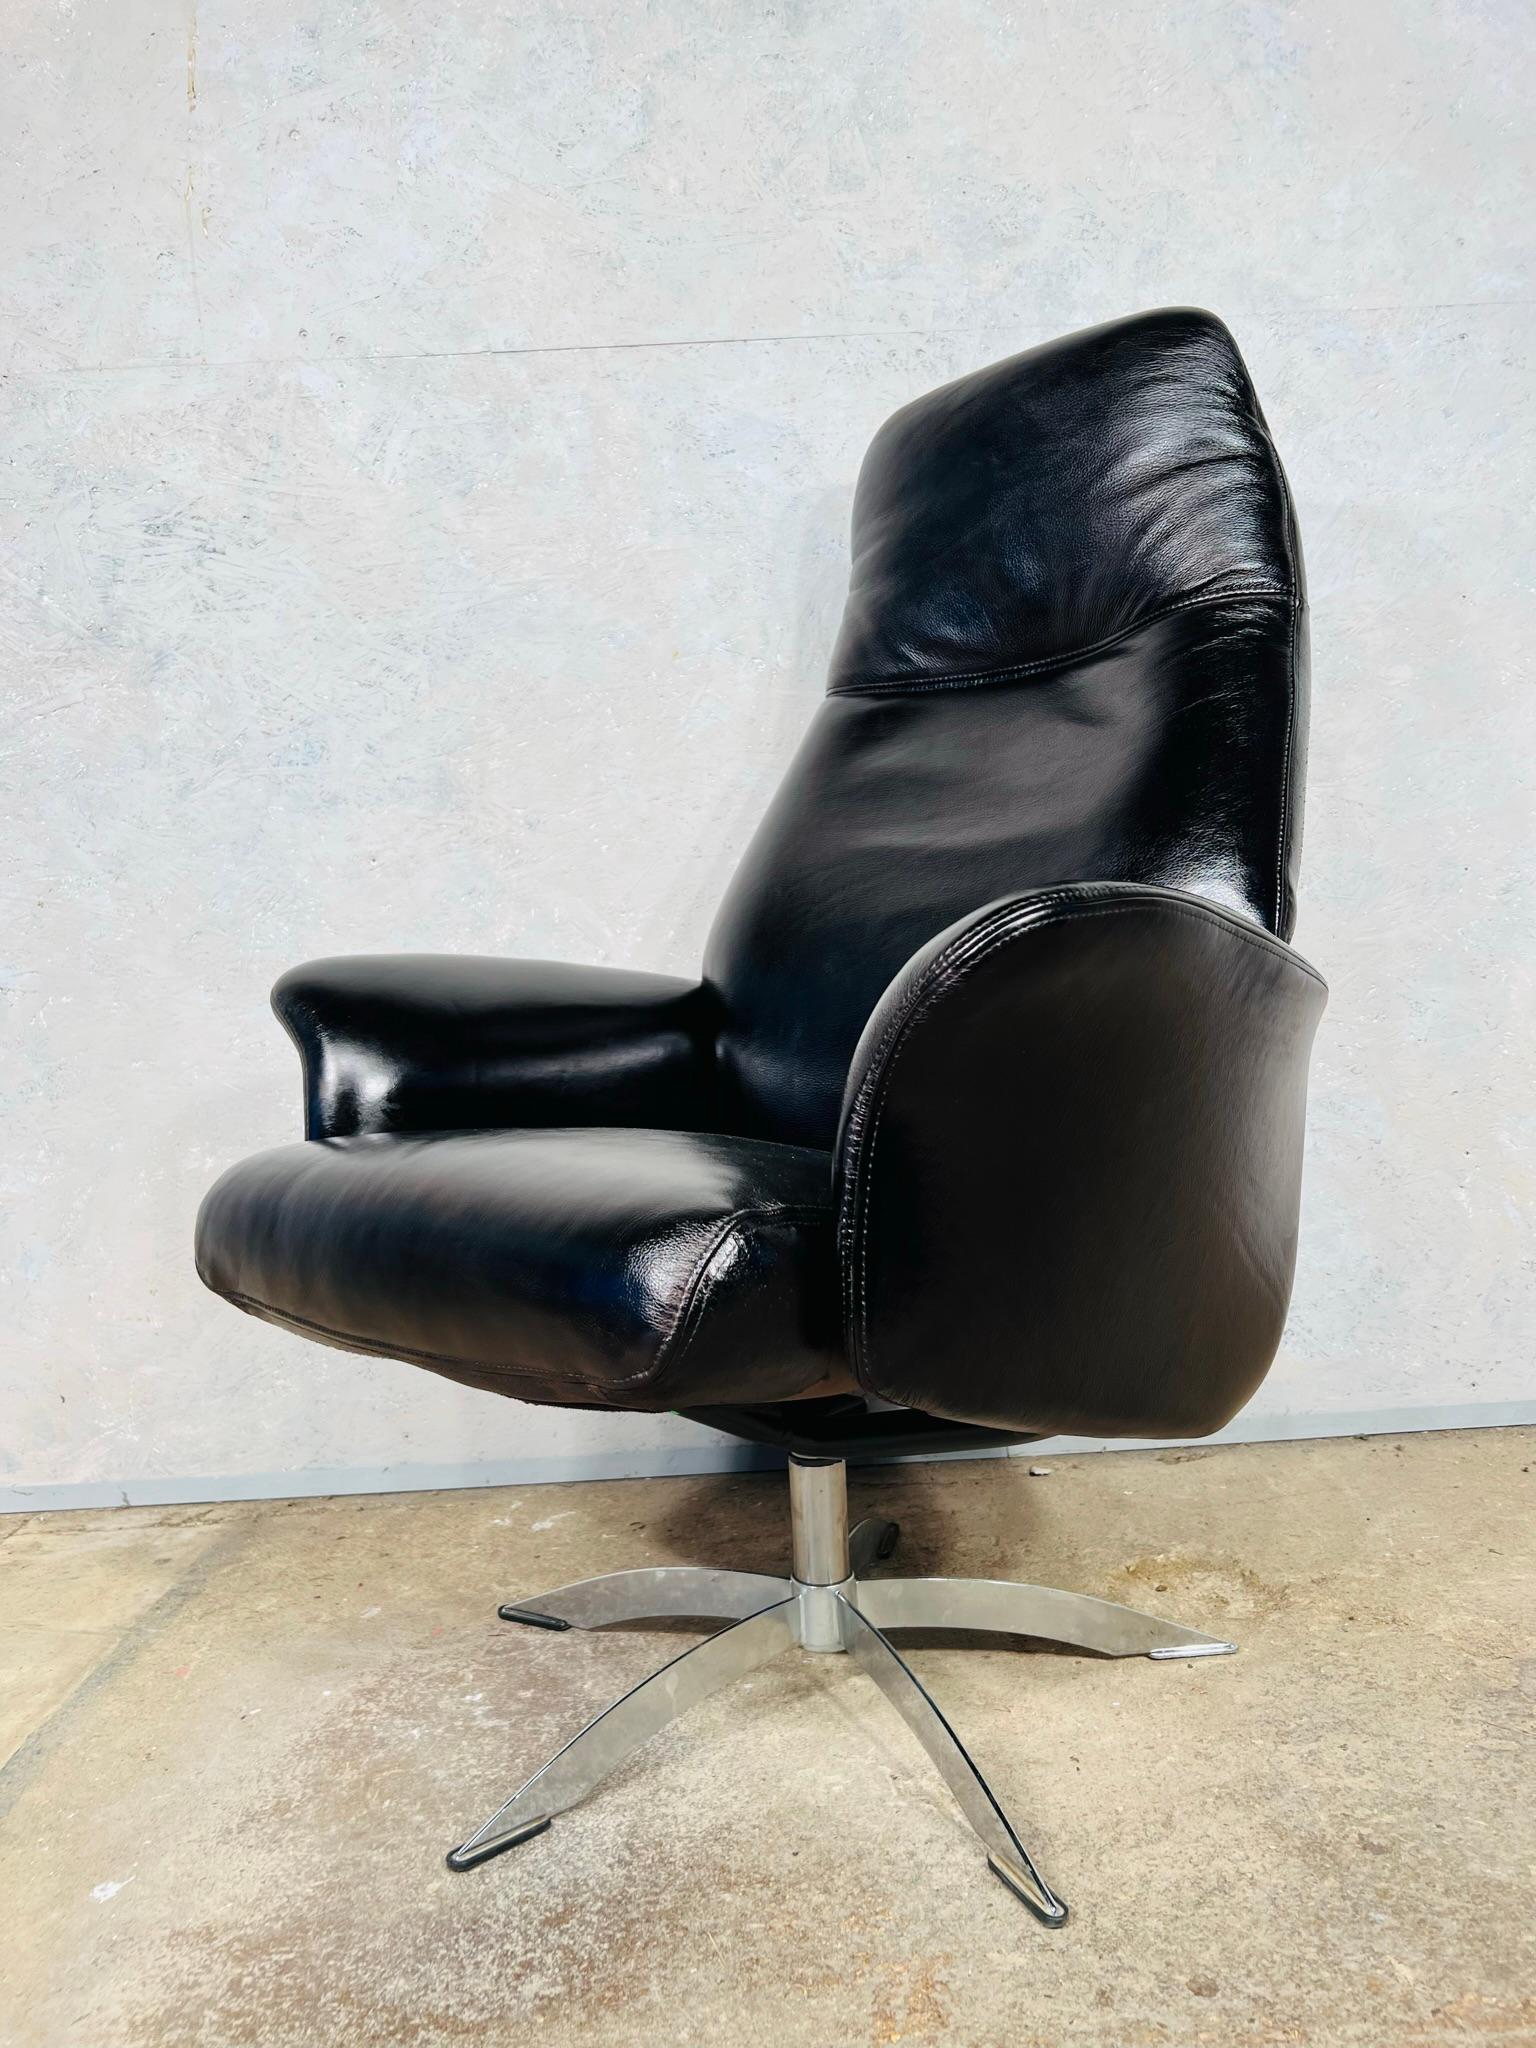 Vintage Danish Swivel Black Leather Desk Chair By Hjort Knudsen #589 3